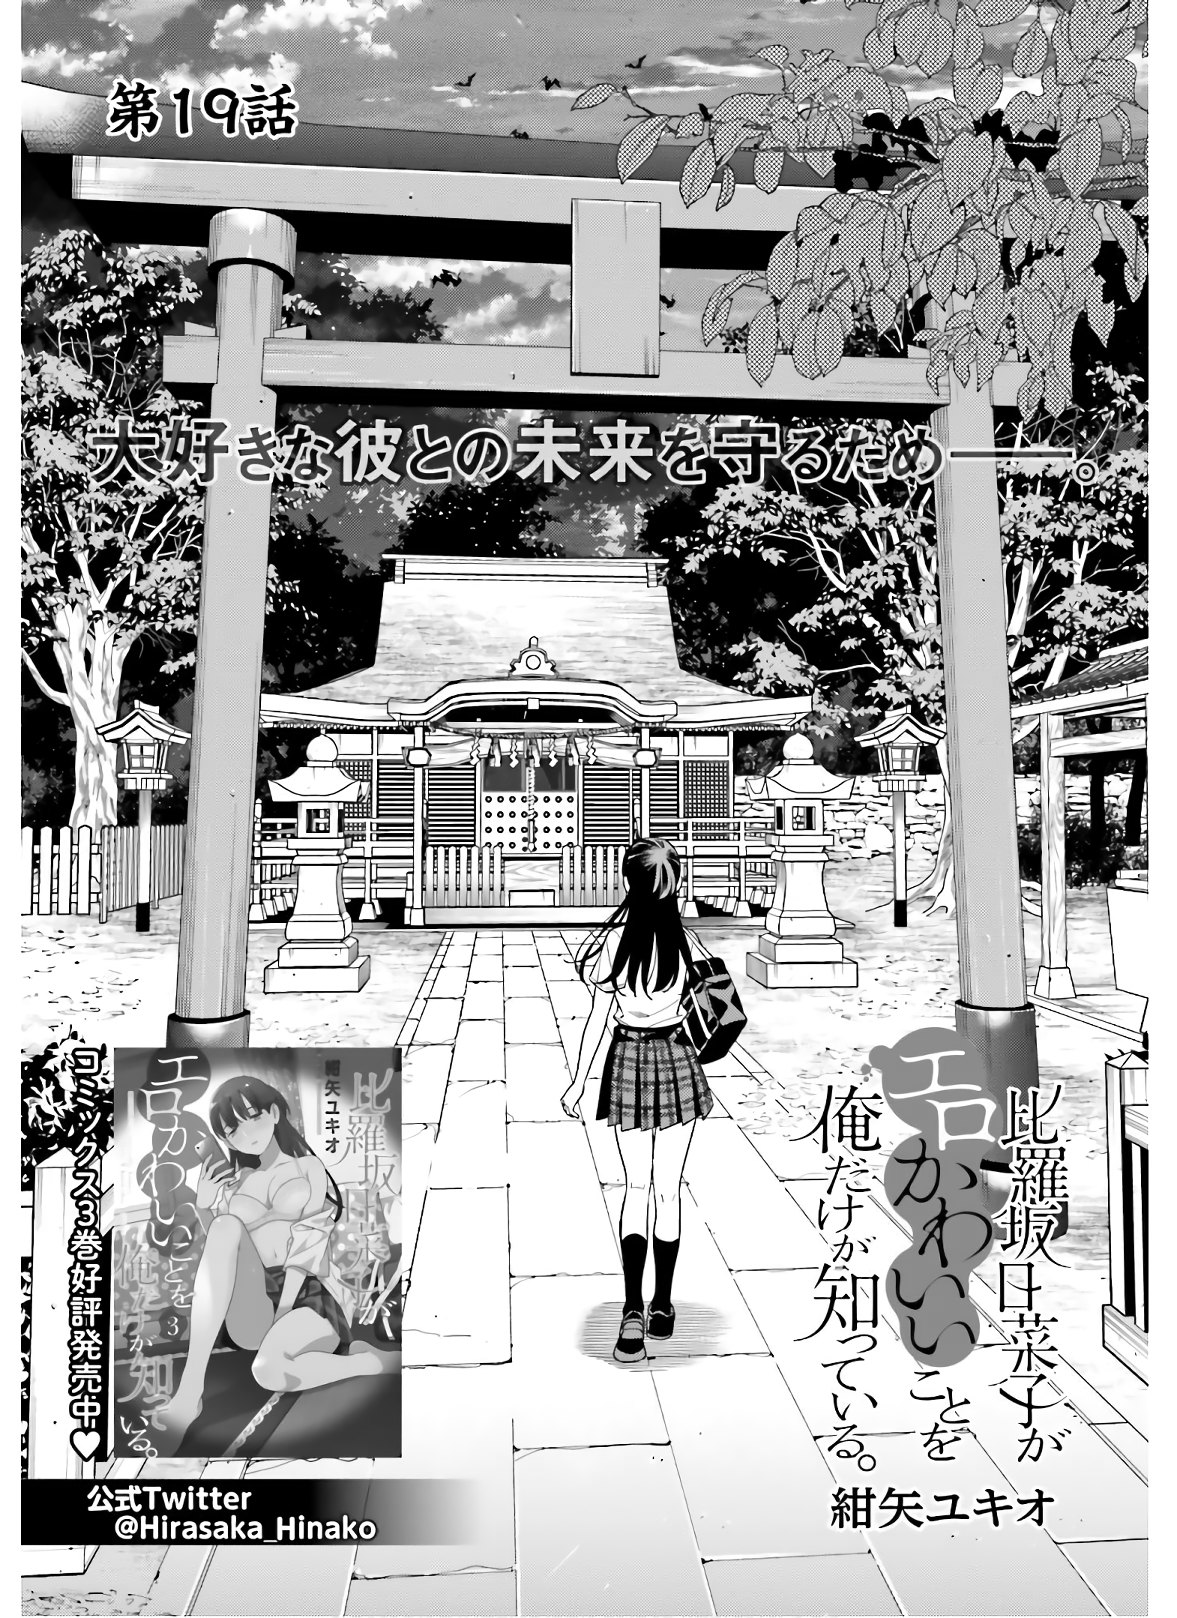 Read Summer Time Render Chapter 12 on Mangakakalot